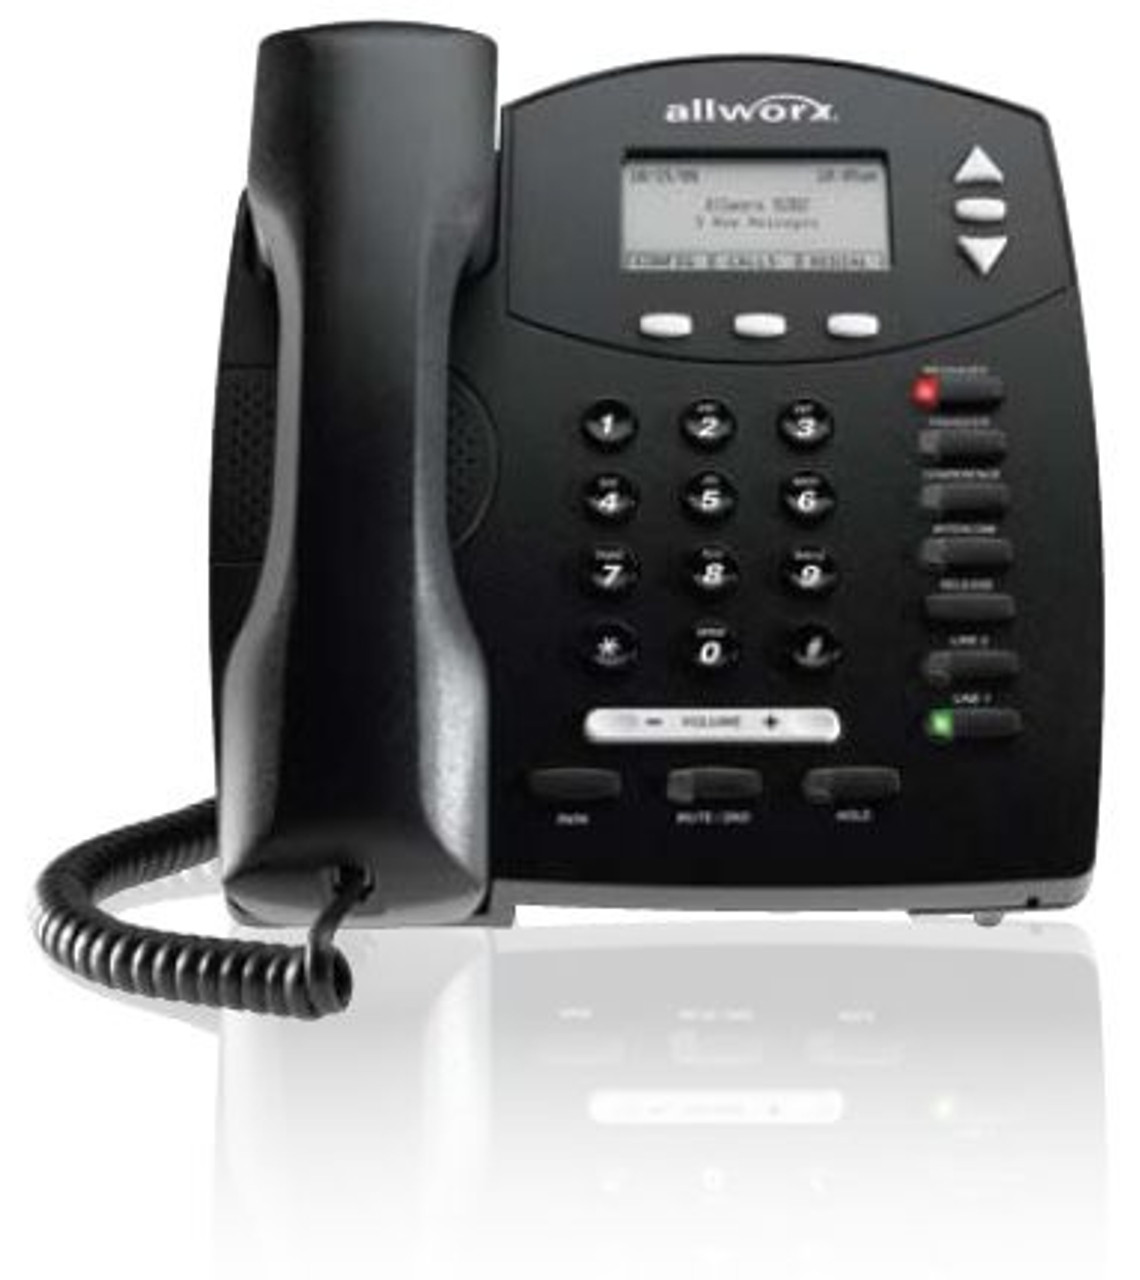 Allworx IP 9202 VoIP Phone